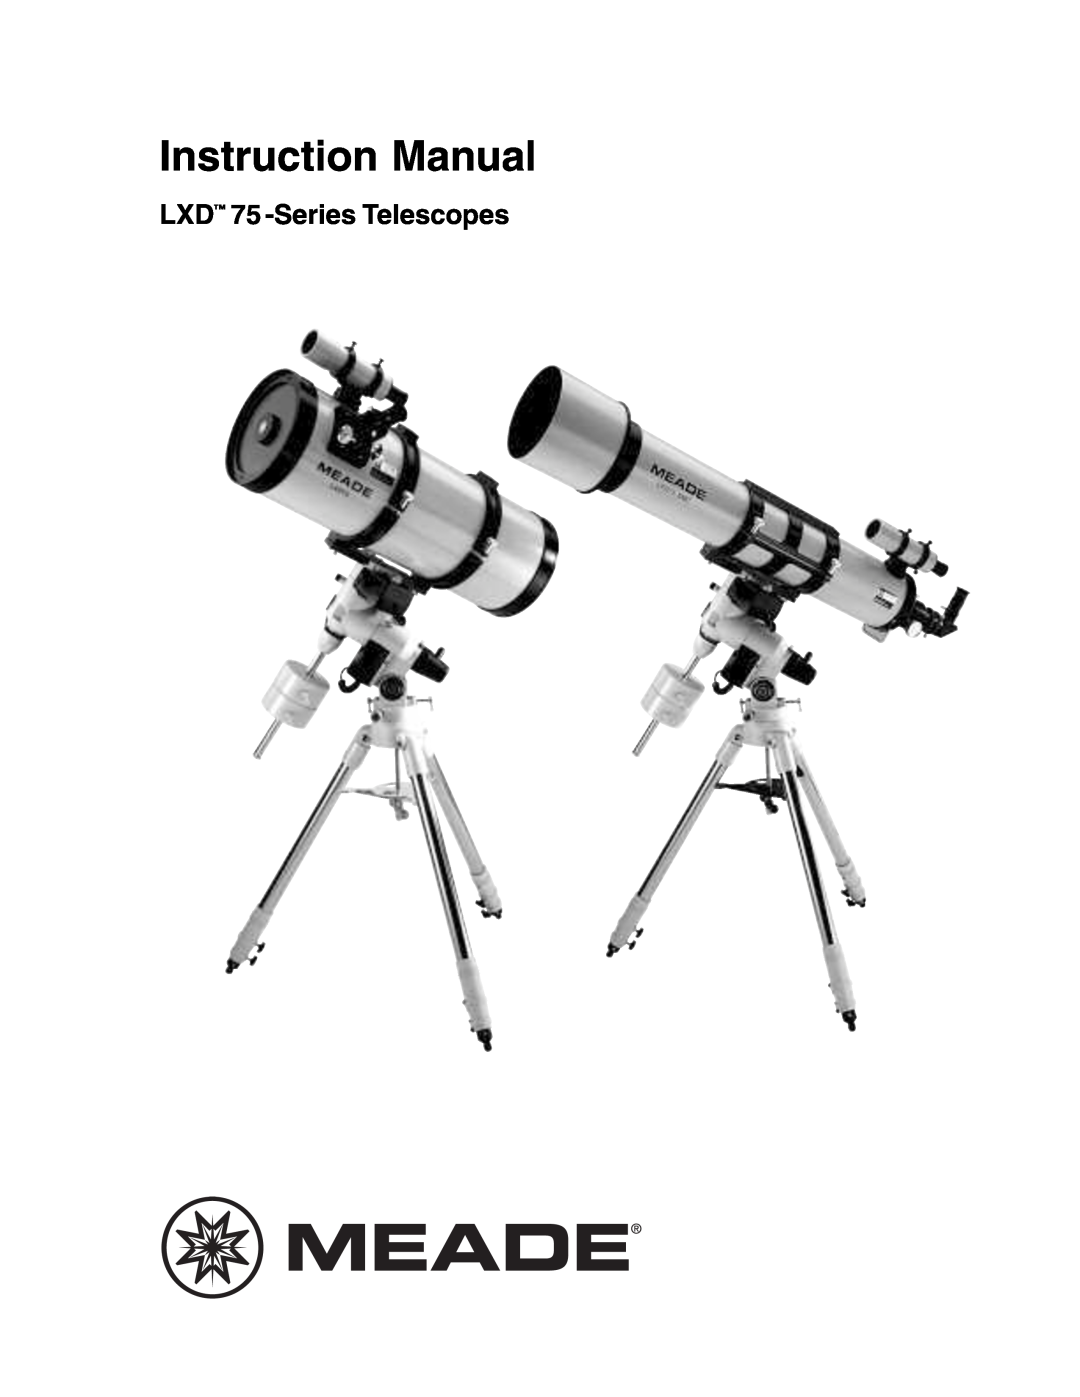 Meade LXD75 instruction manual Instruction Manual, LXD 75 -Series Telescopes 